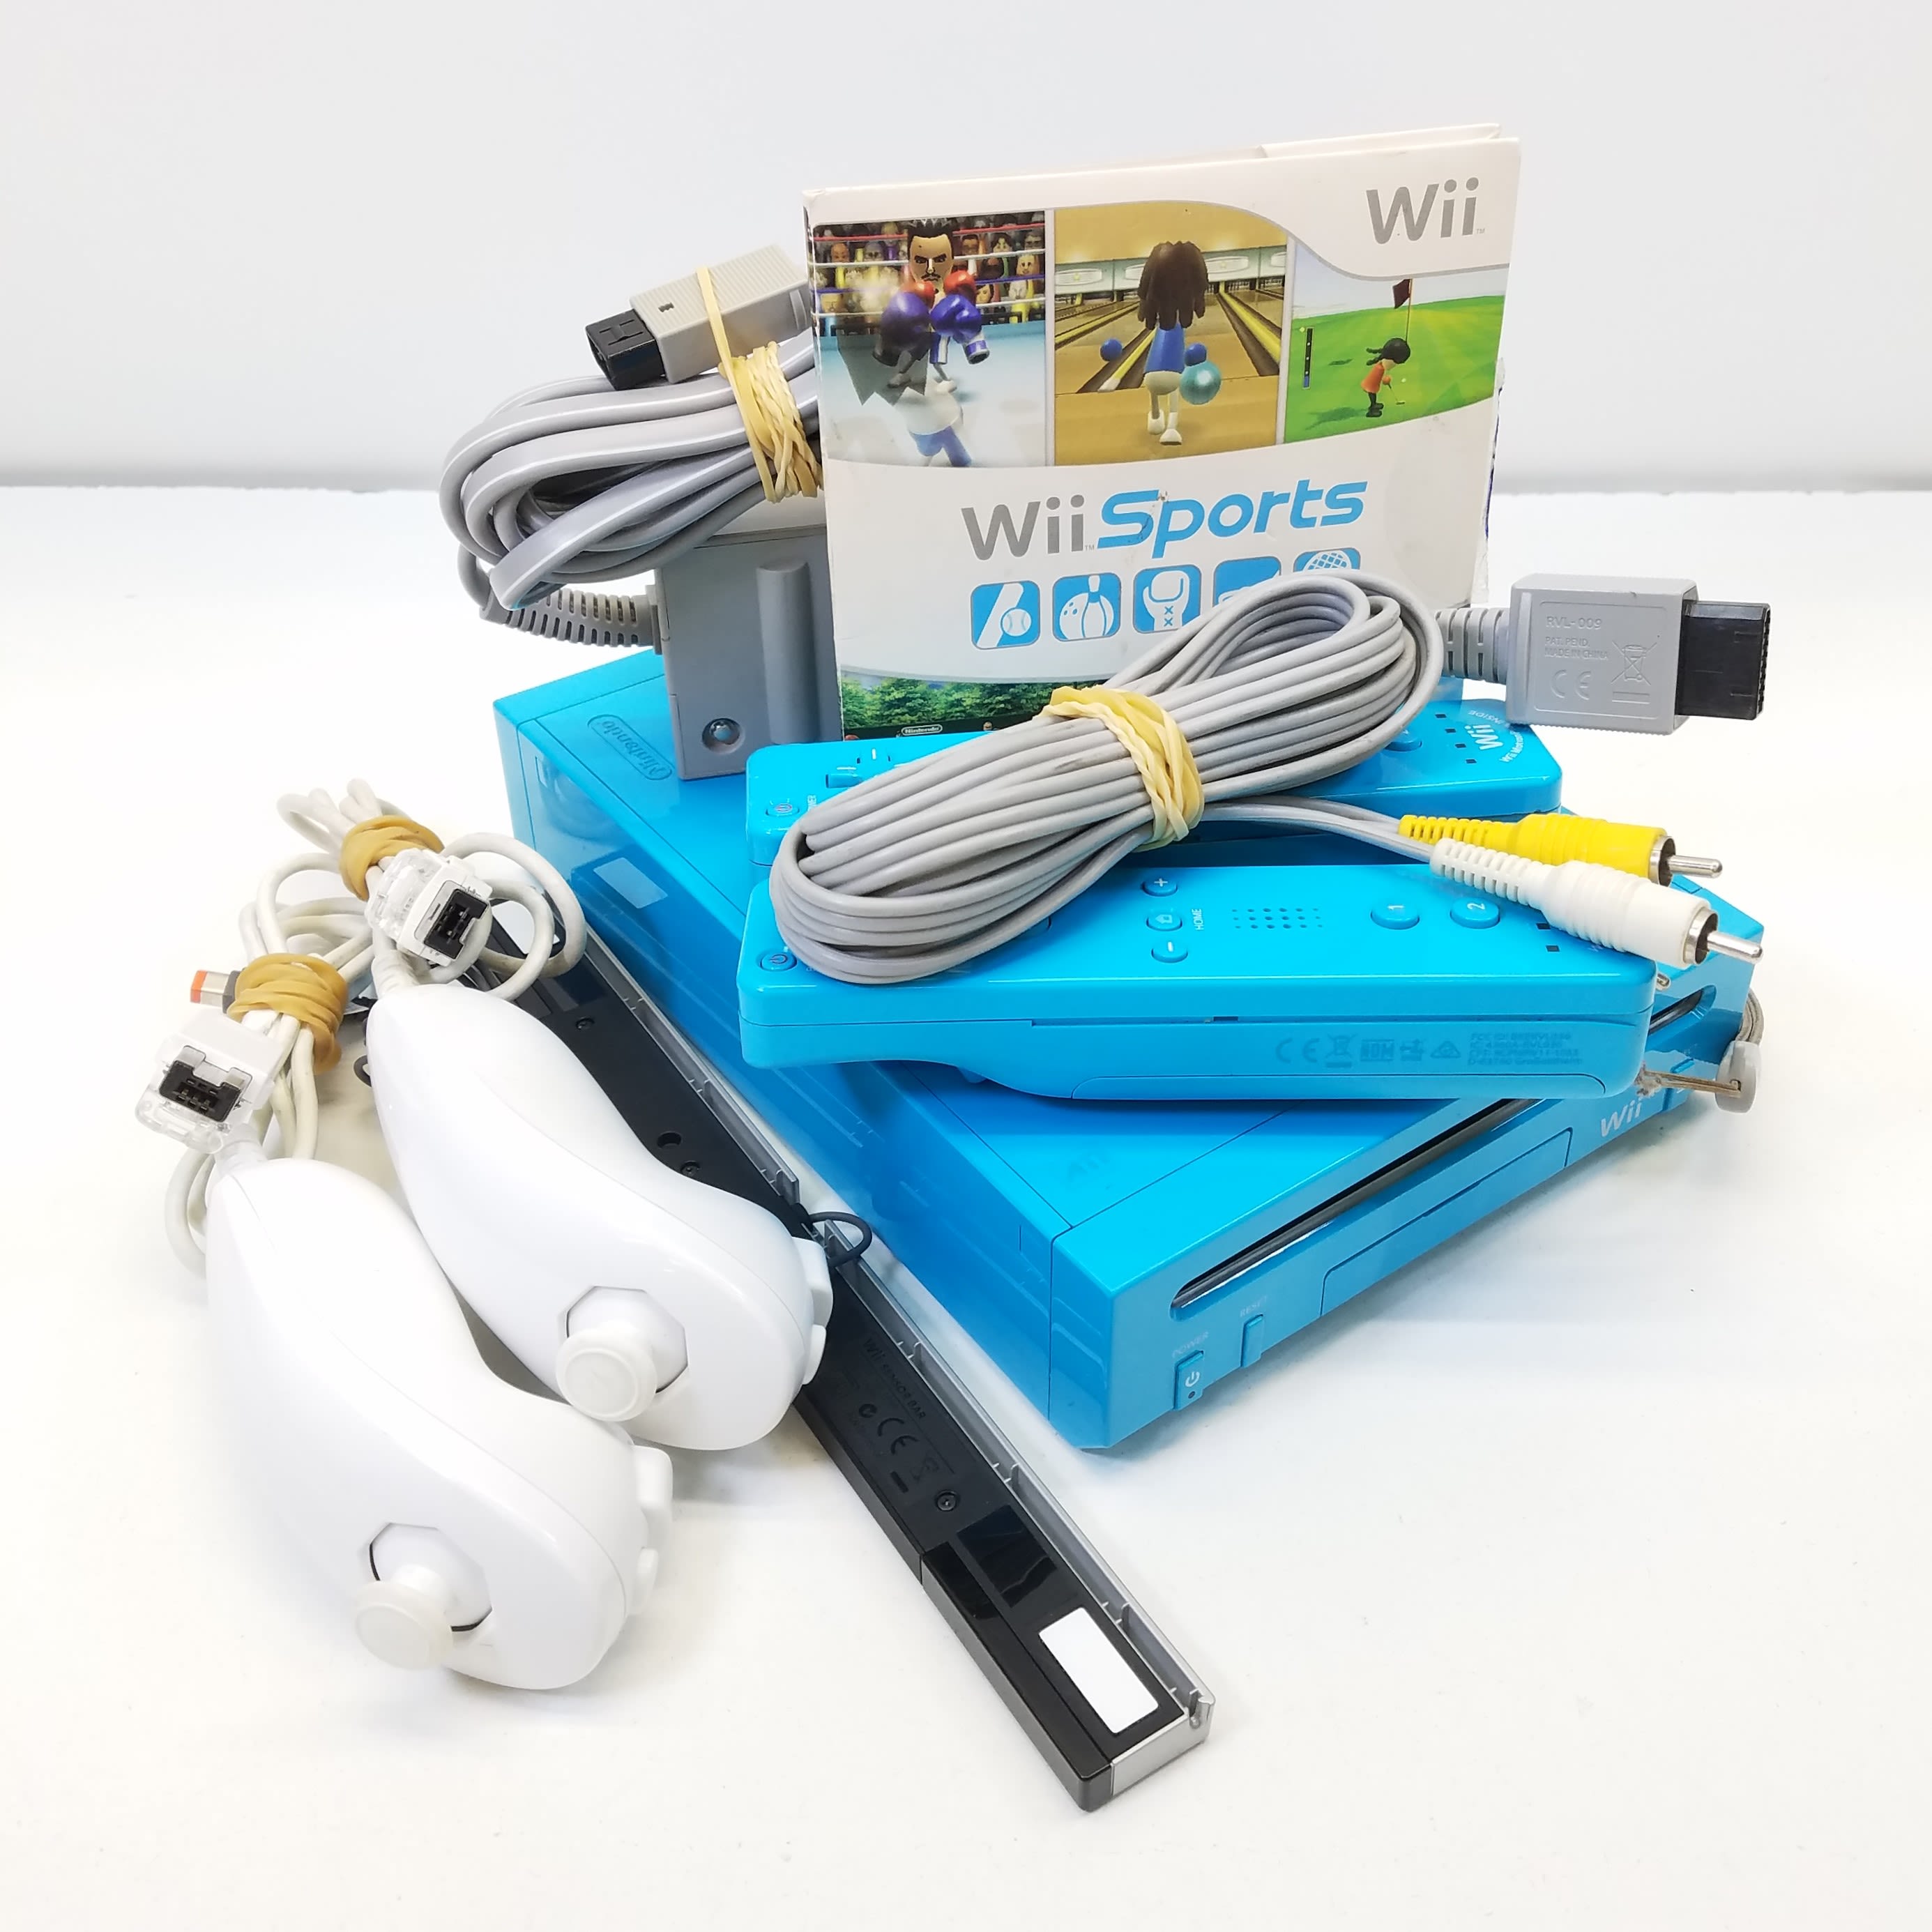 Nintendo Wii for sale in Aska, Georgia, Facebook Marketplace